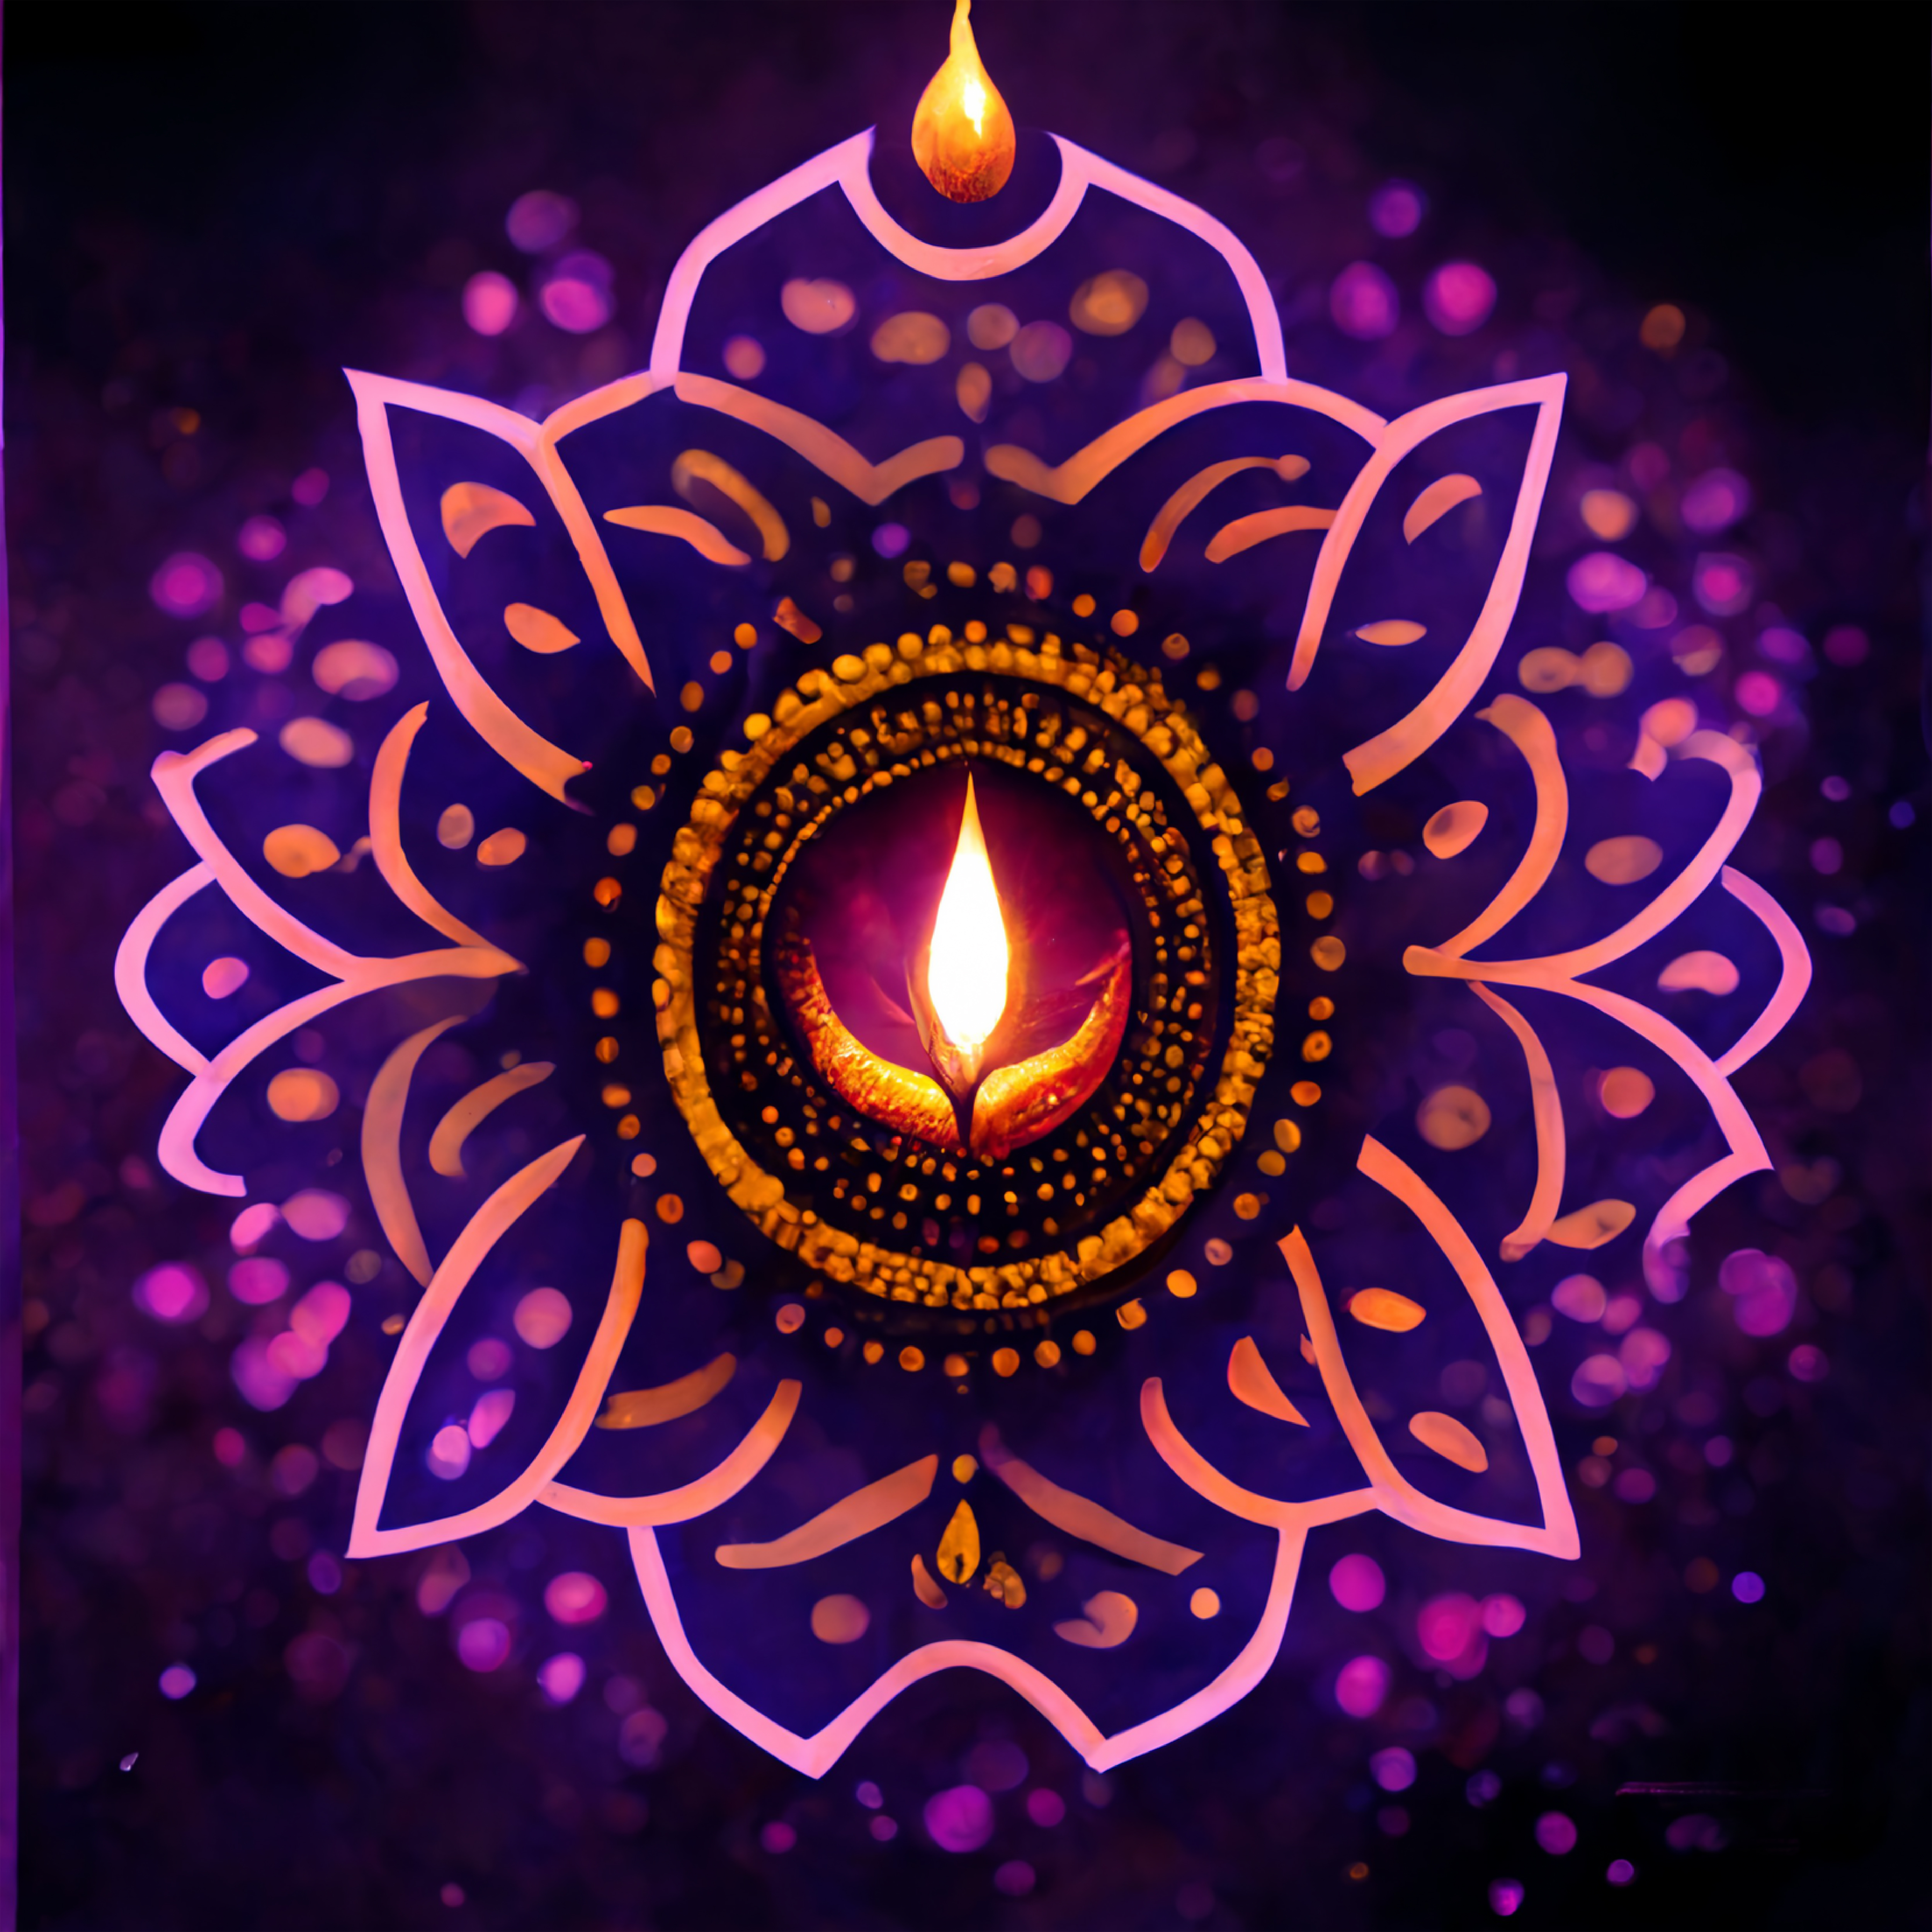 Free Happy Diwali Background with Diya and Rangoli Design